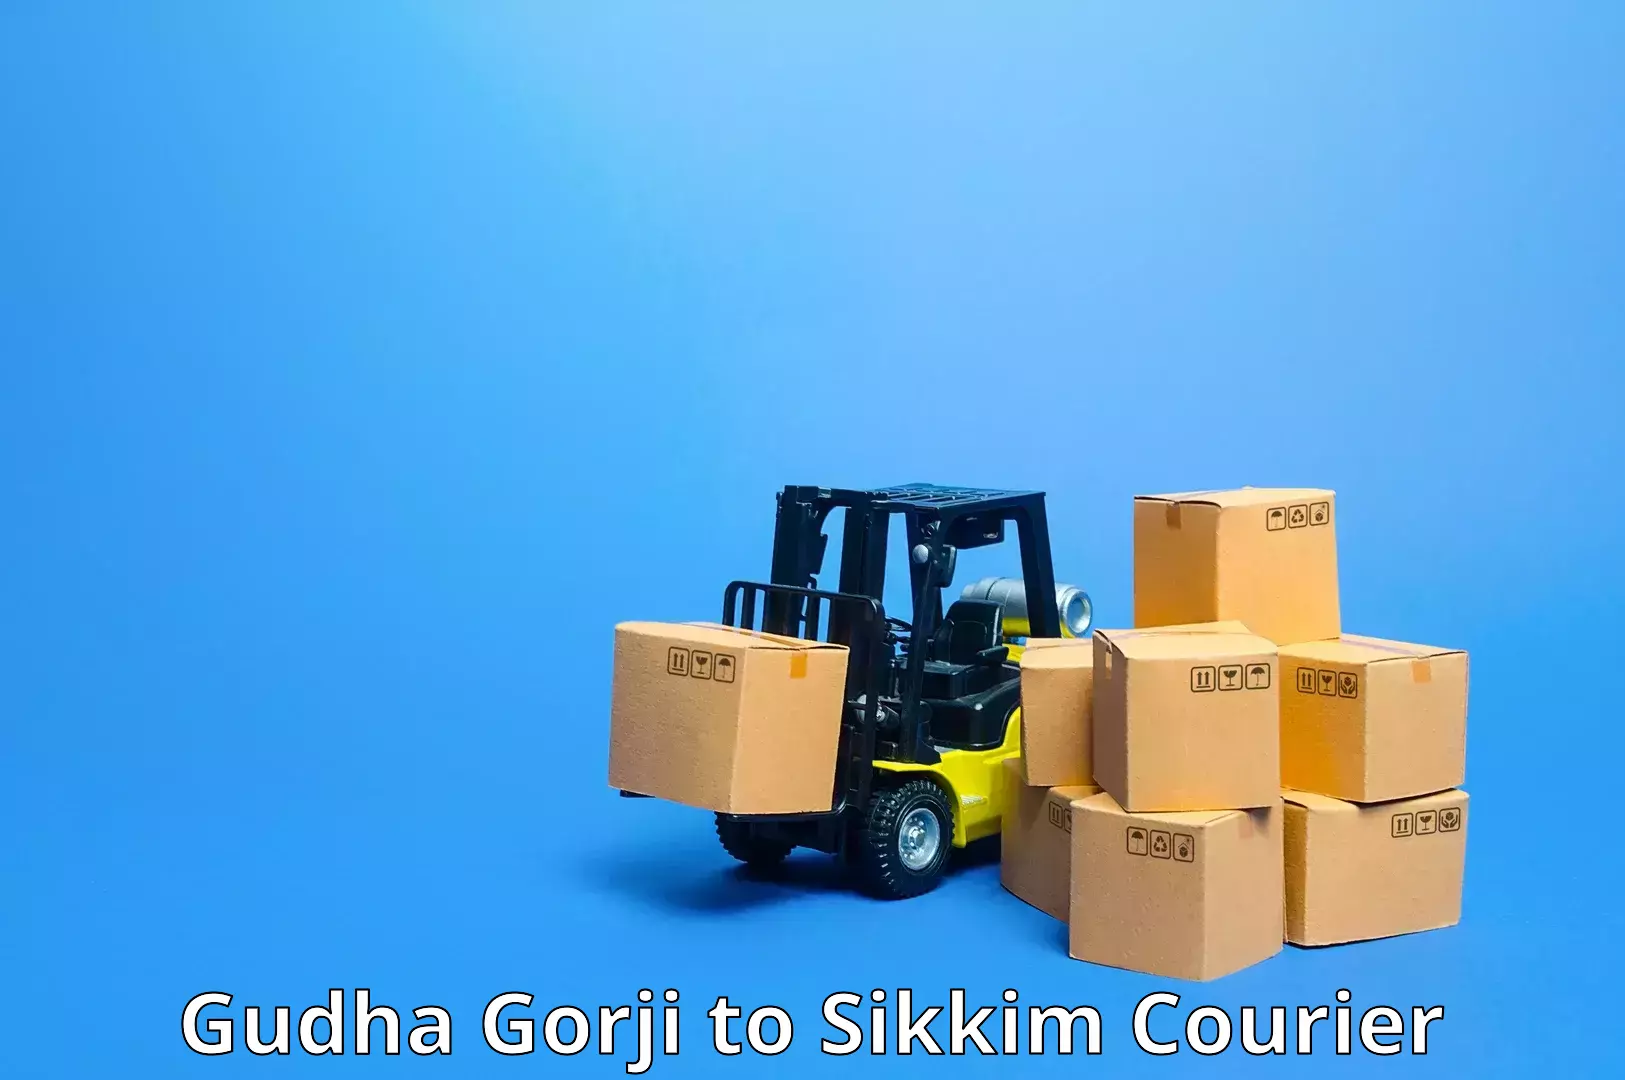 Courier service innovation Gudha Gorji to South Sikkim